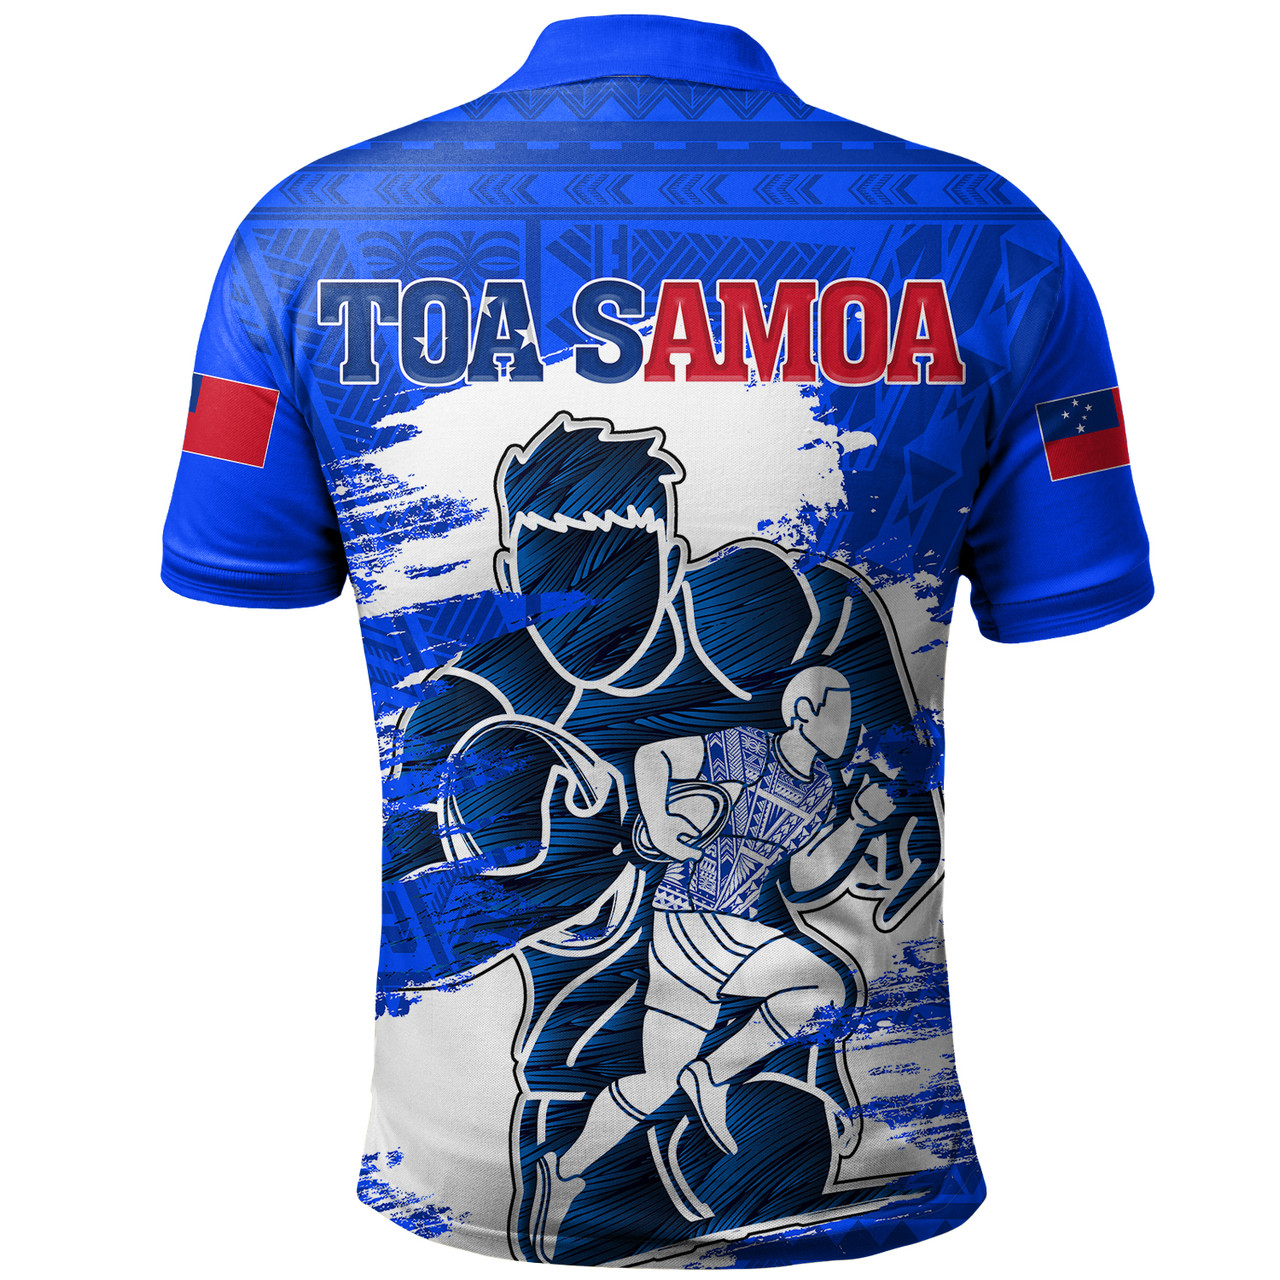 Samoa Polo Shirt Toa Samoa Rugby League Sport